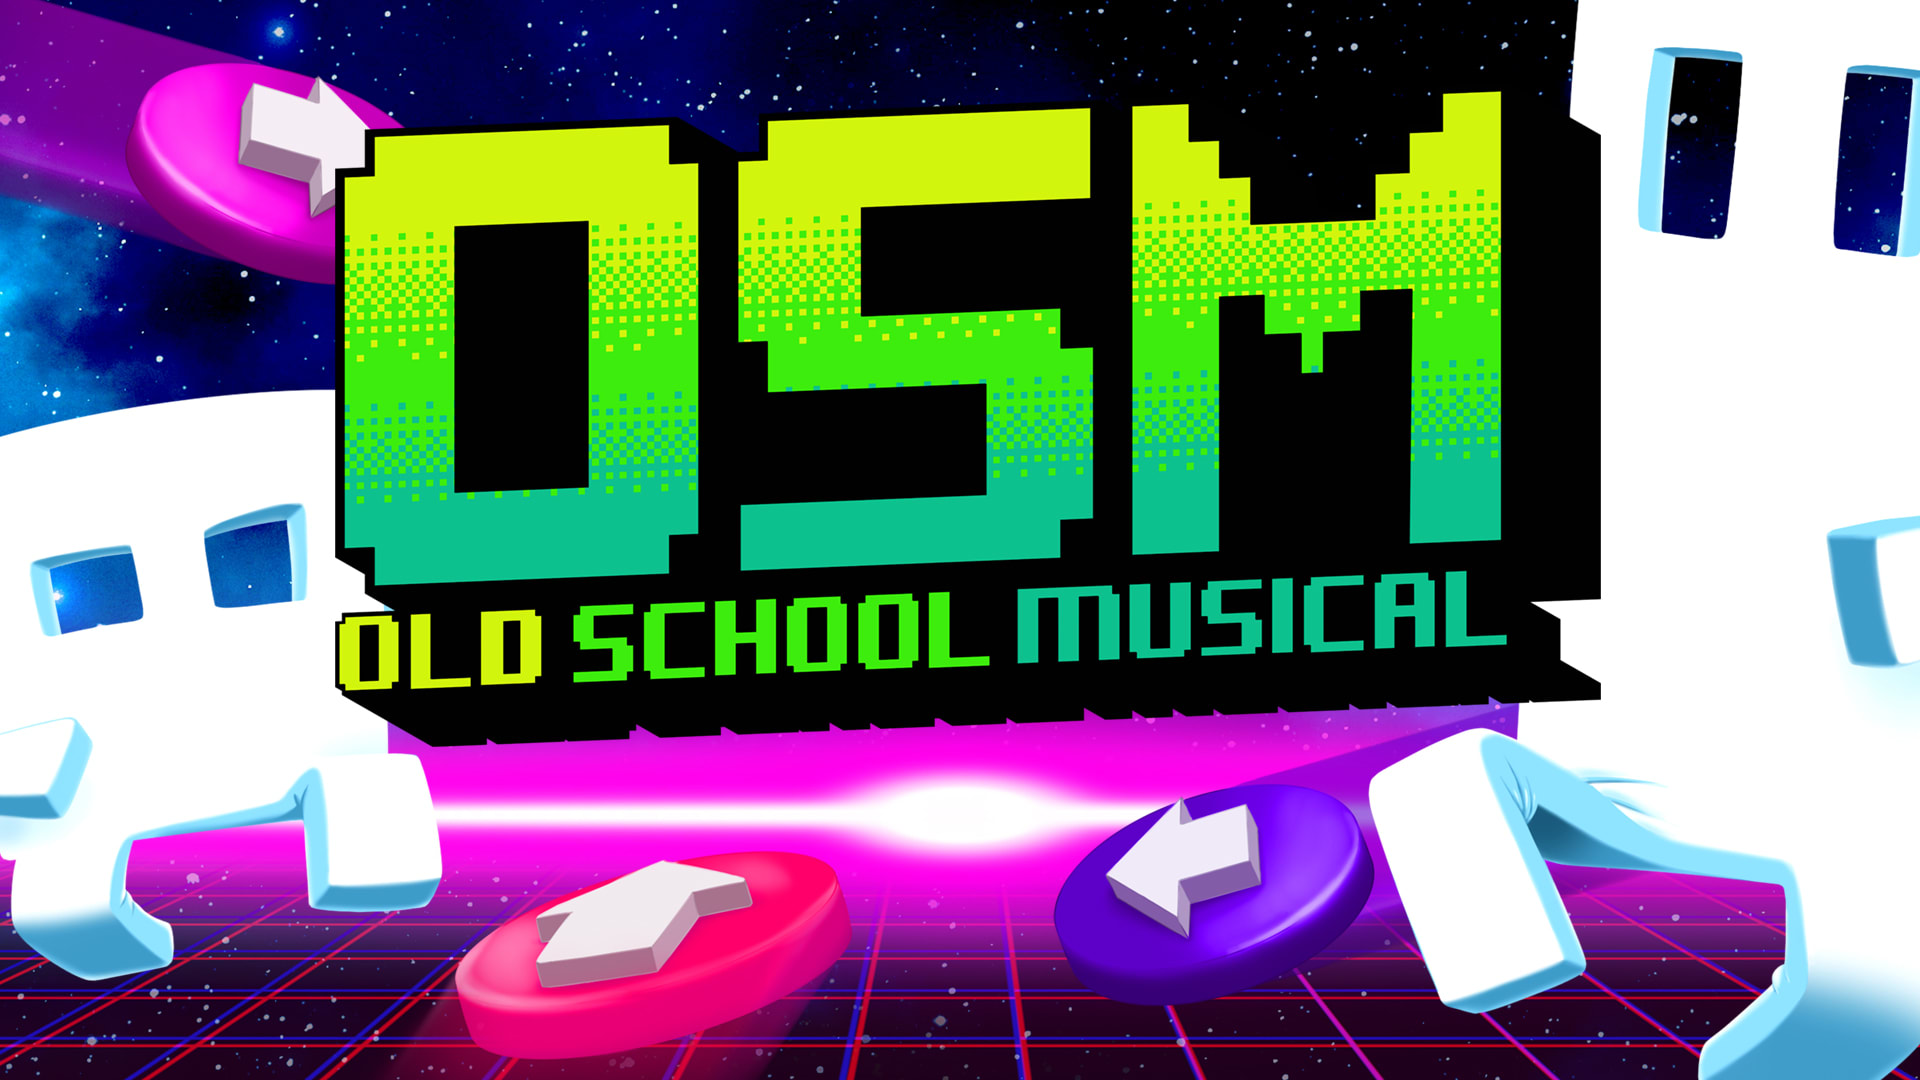 Old School Musical (Nintendo Switch Digital Download) $4.54